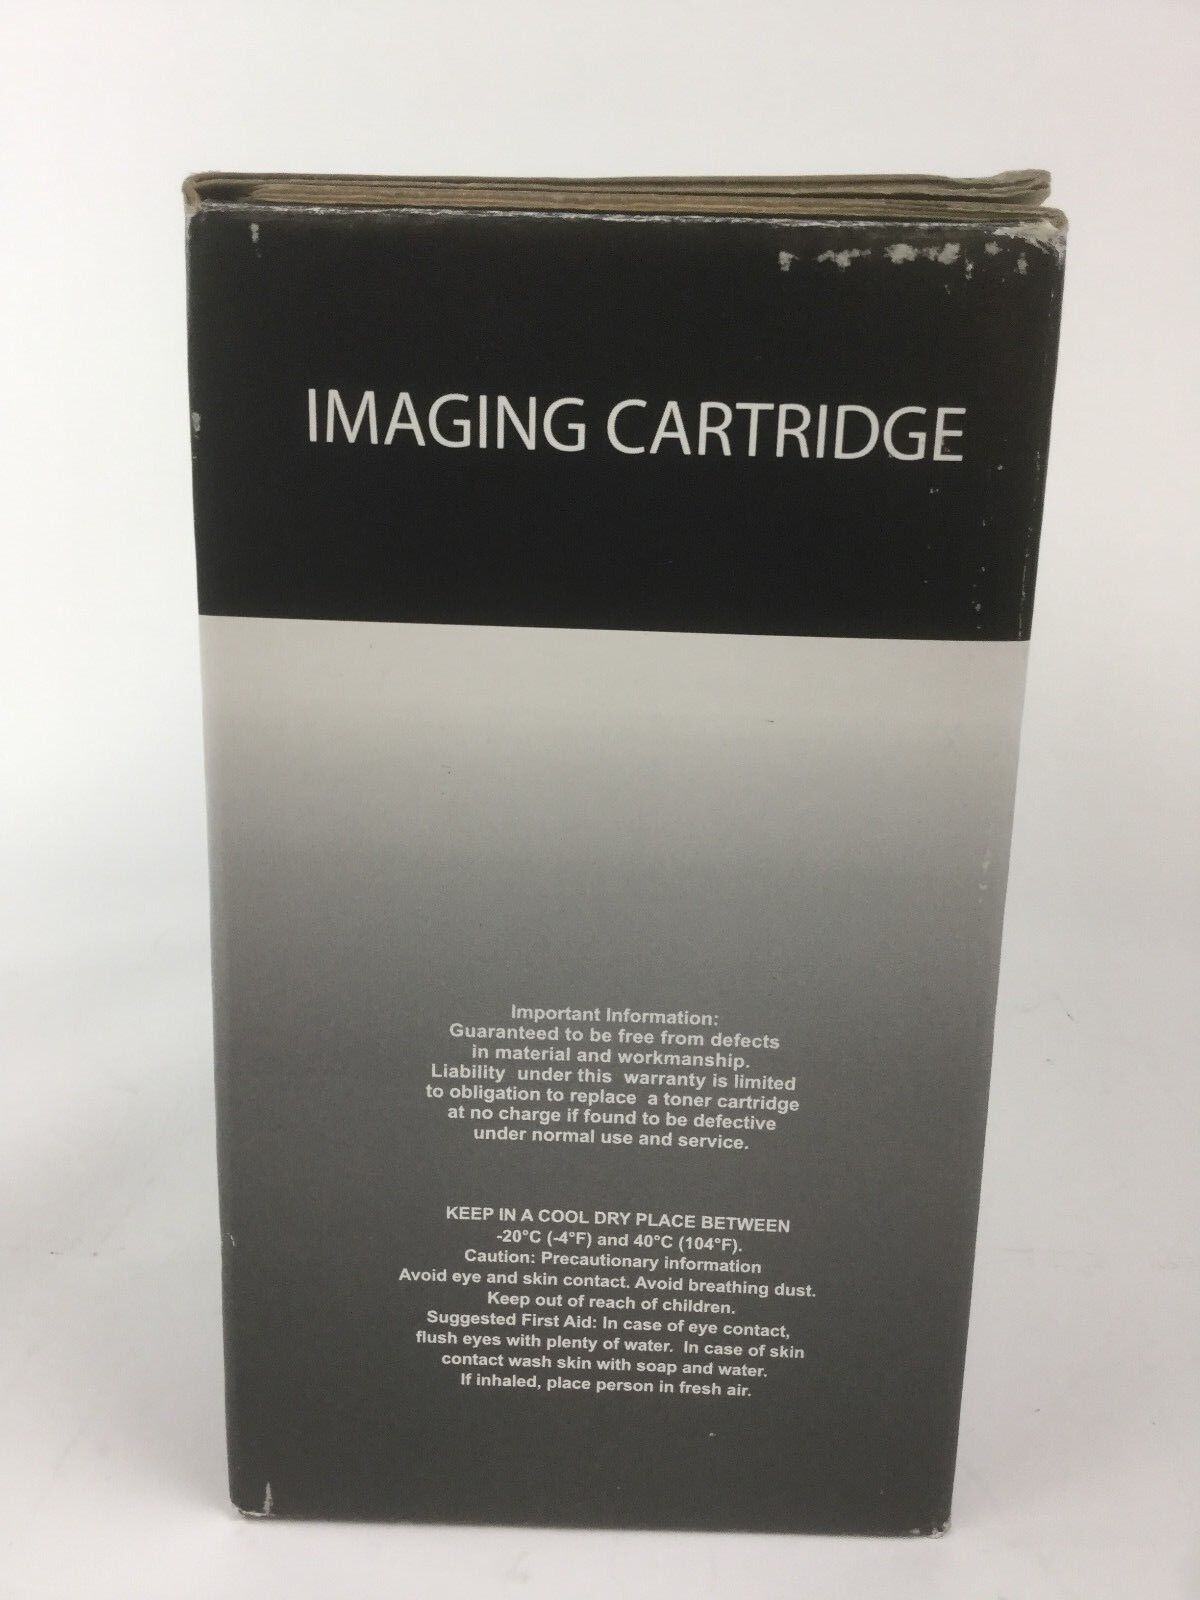 IMAGING CARTRIDGE, Magenta Toner Cartridge Compatible for HP Q6473A,HP 3800, NEW